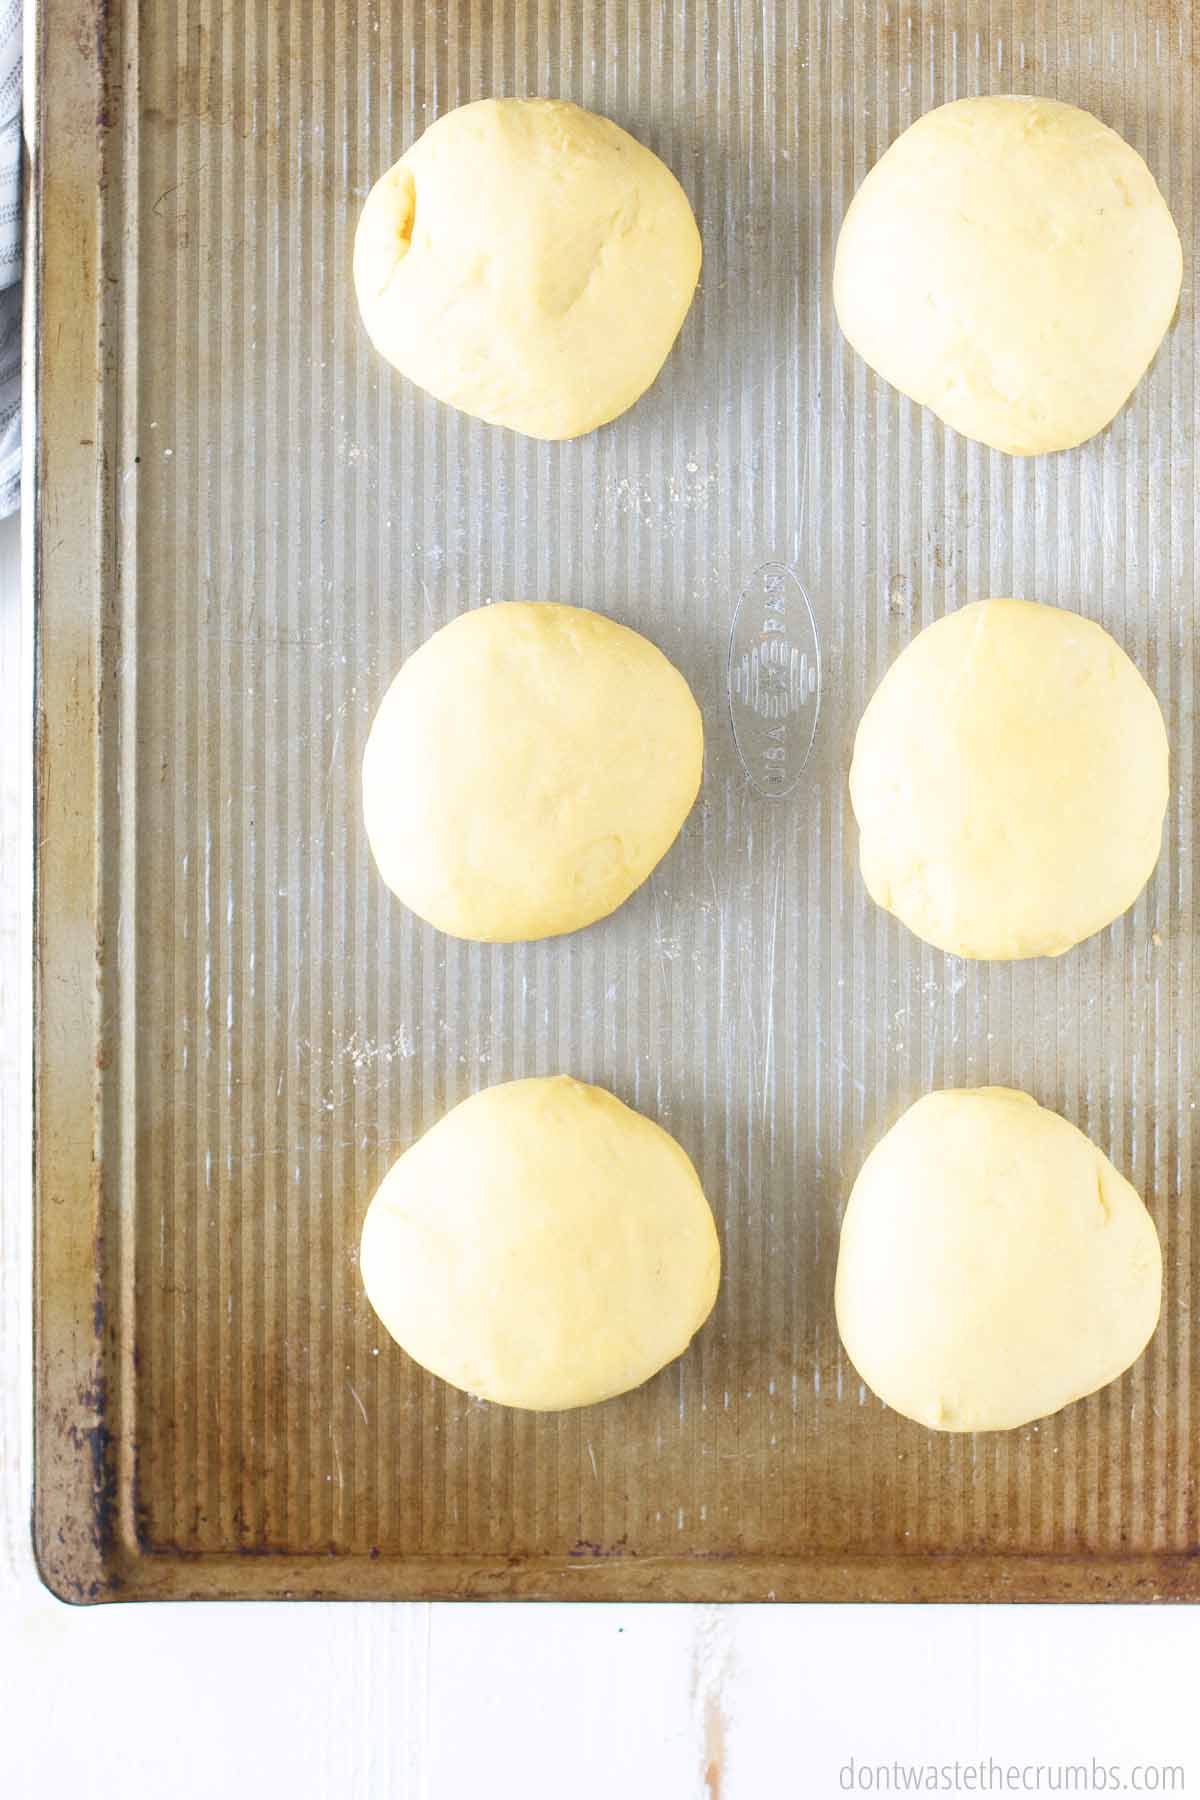 Six balls of dough on a baking pan,